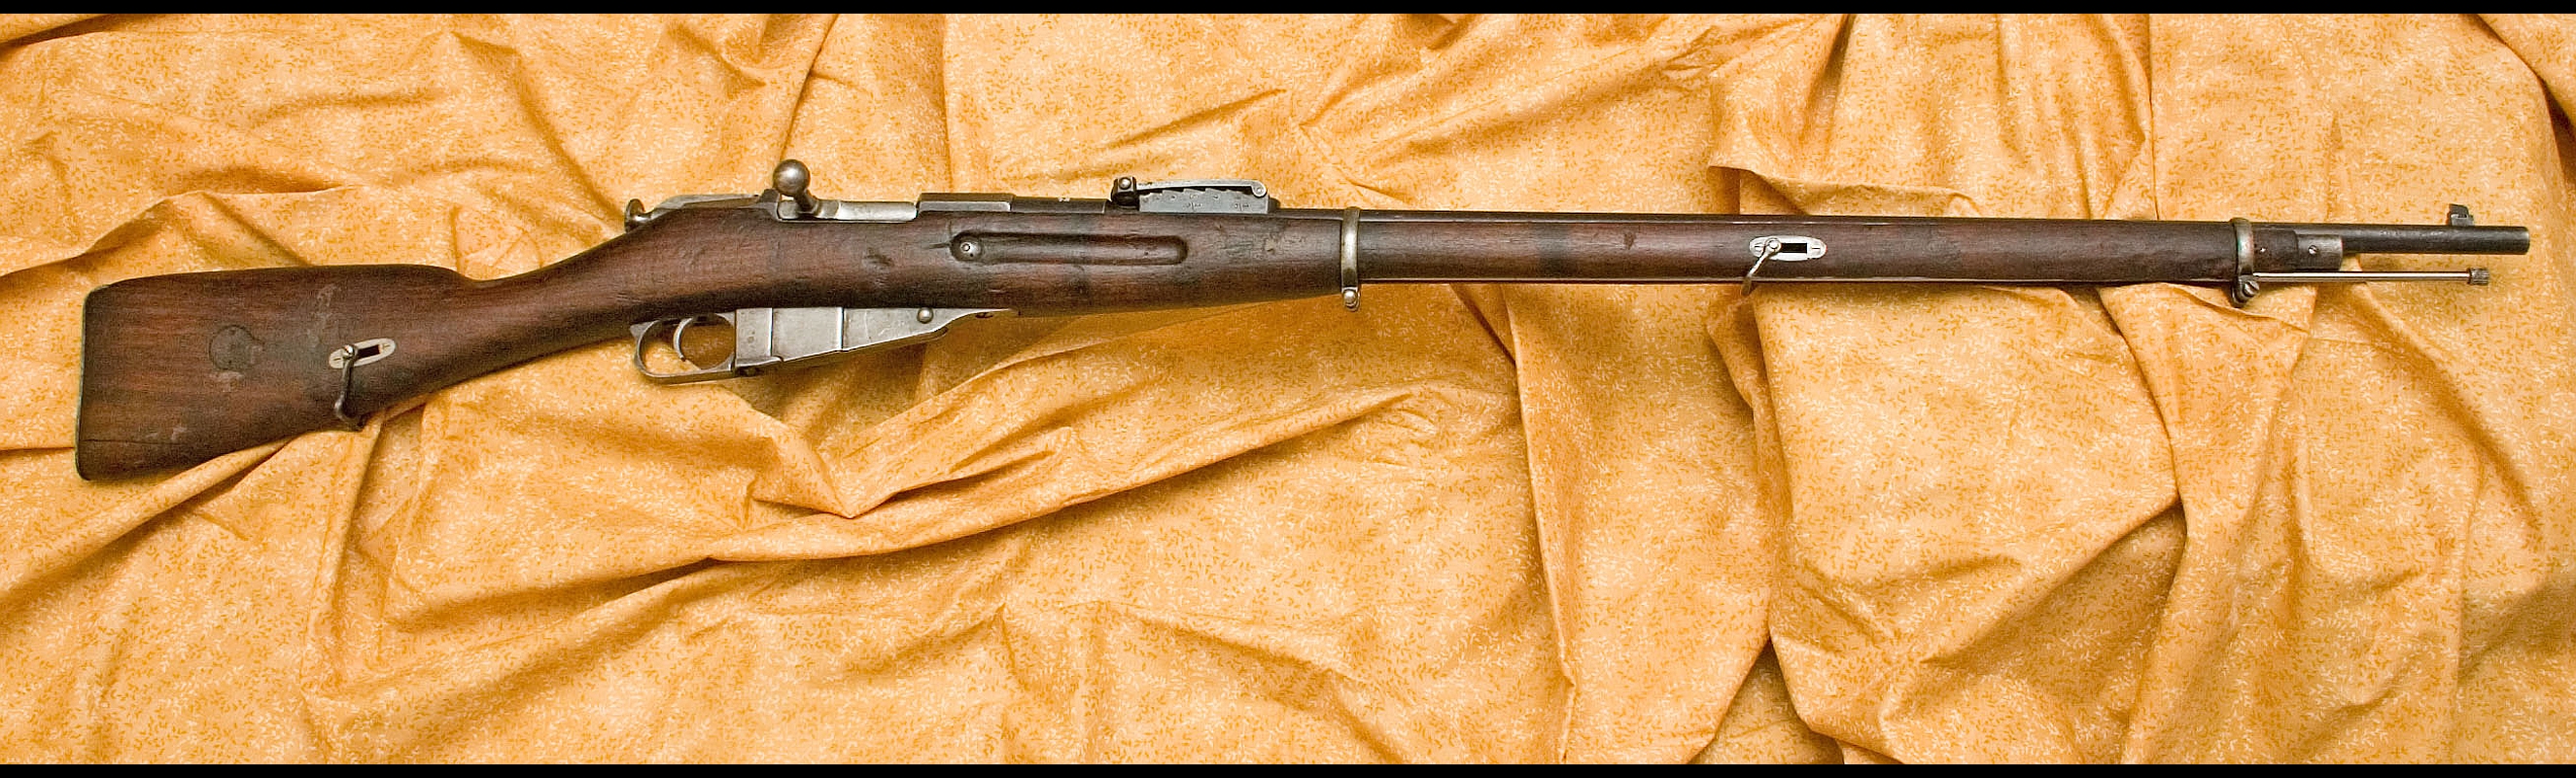 Weapons Mosin Nagant M91 Rifle 2650x800